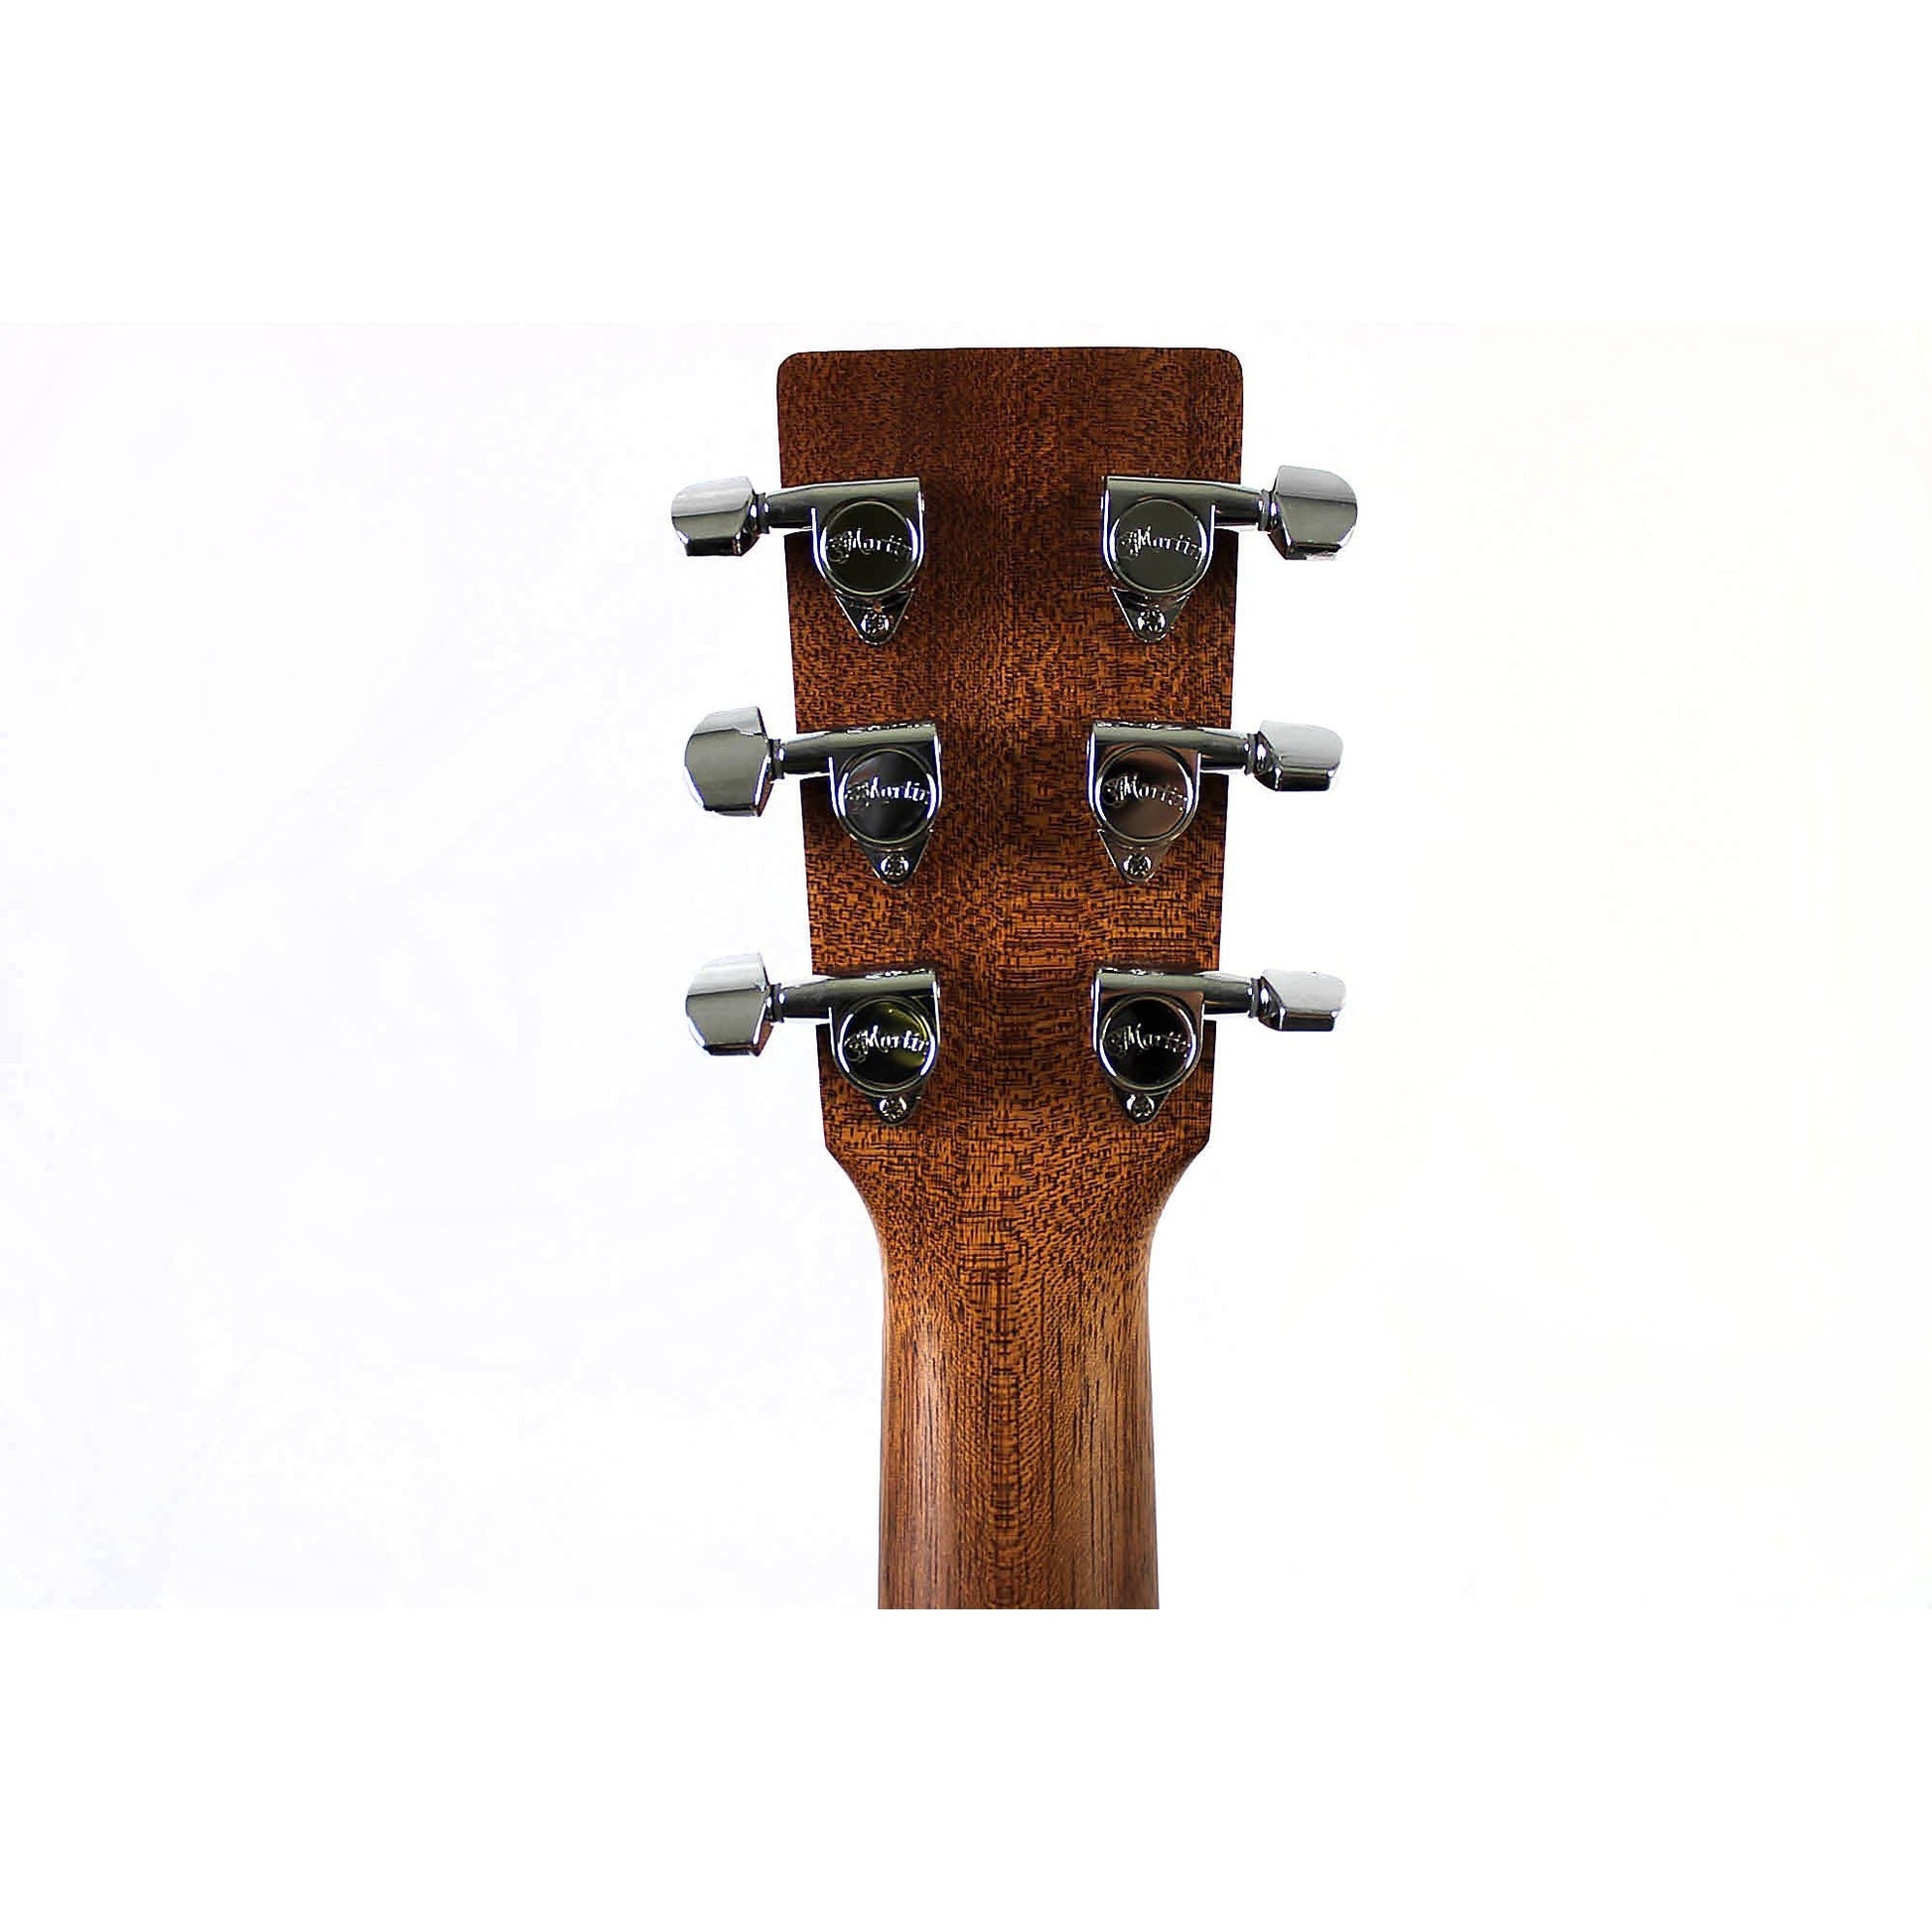 Martin D Jr-10 Acoustic Guitar - Natural Spruce - Leitz Music-729789522014-djr1002